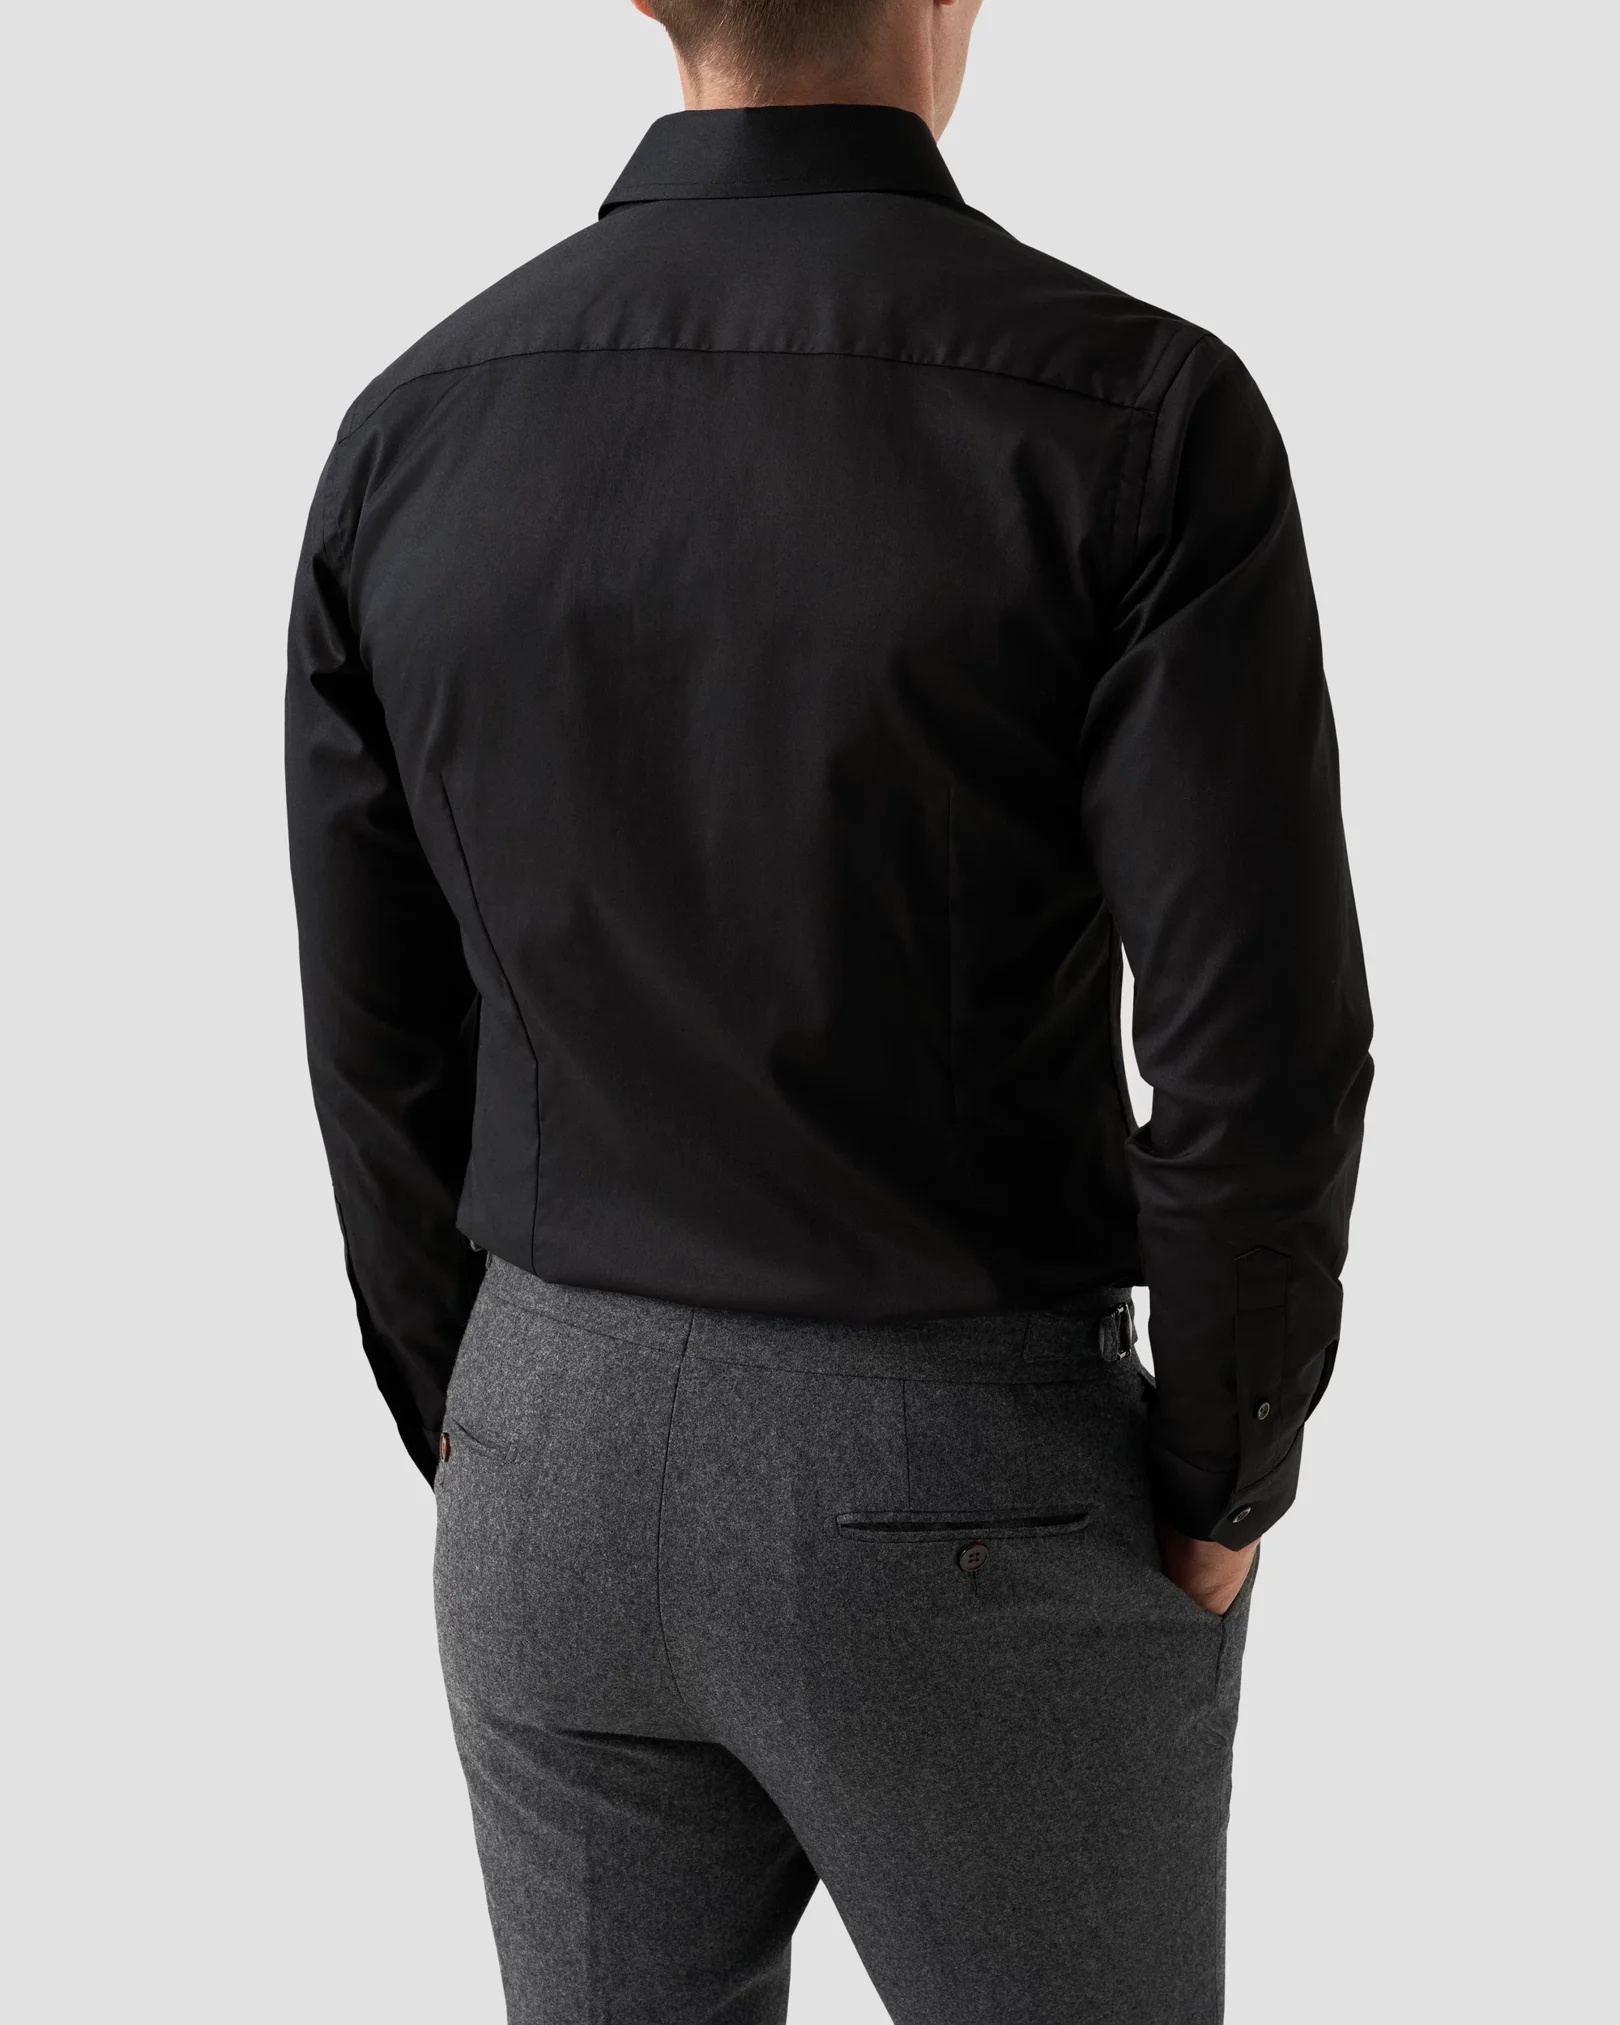 Eton - black twill stretch shirt extreme cut away